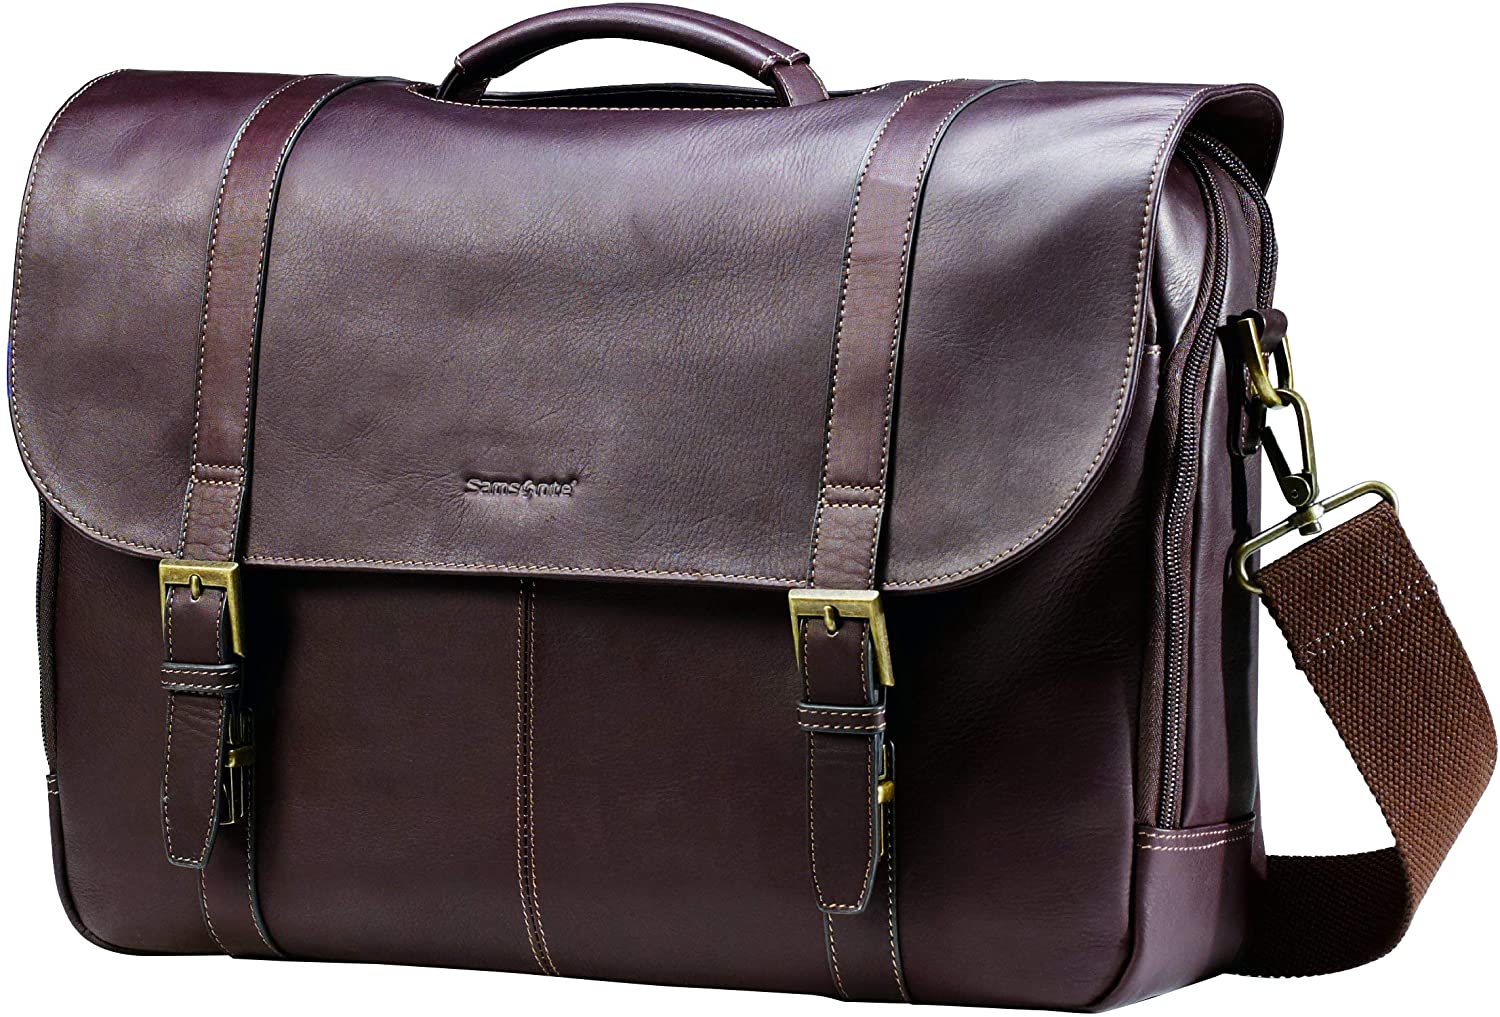 Samsonite Colombian Leather Flap-Over Messenger Bag | eBay